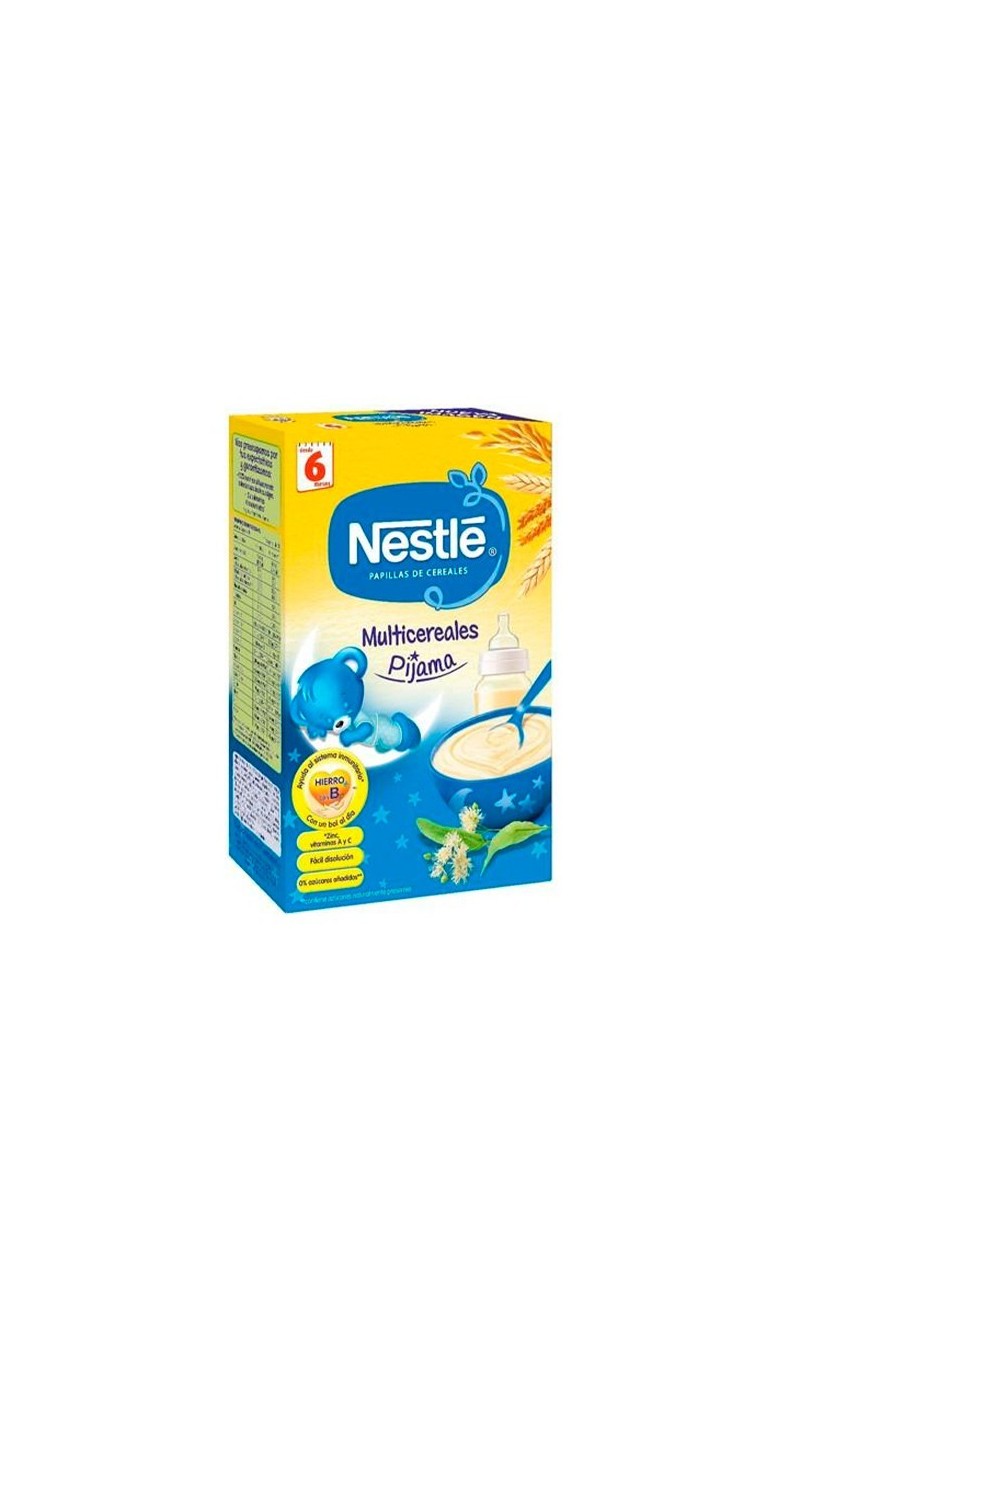 NESTLE - Nestlé Multicereal Porridge Pijama 500g